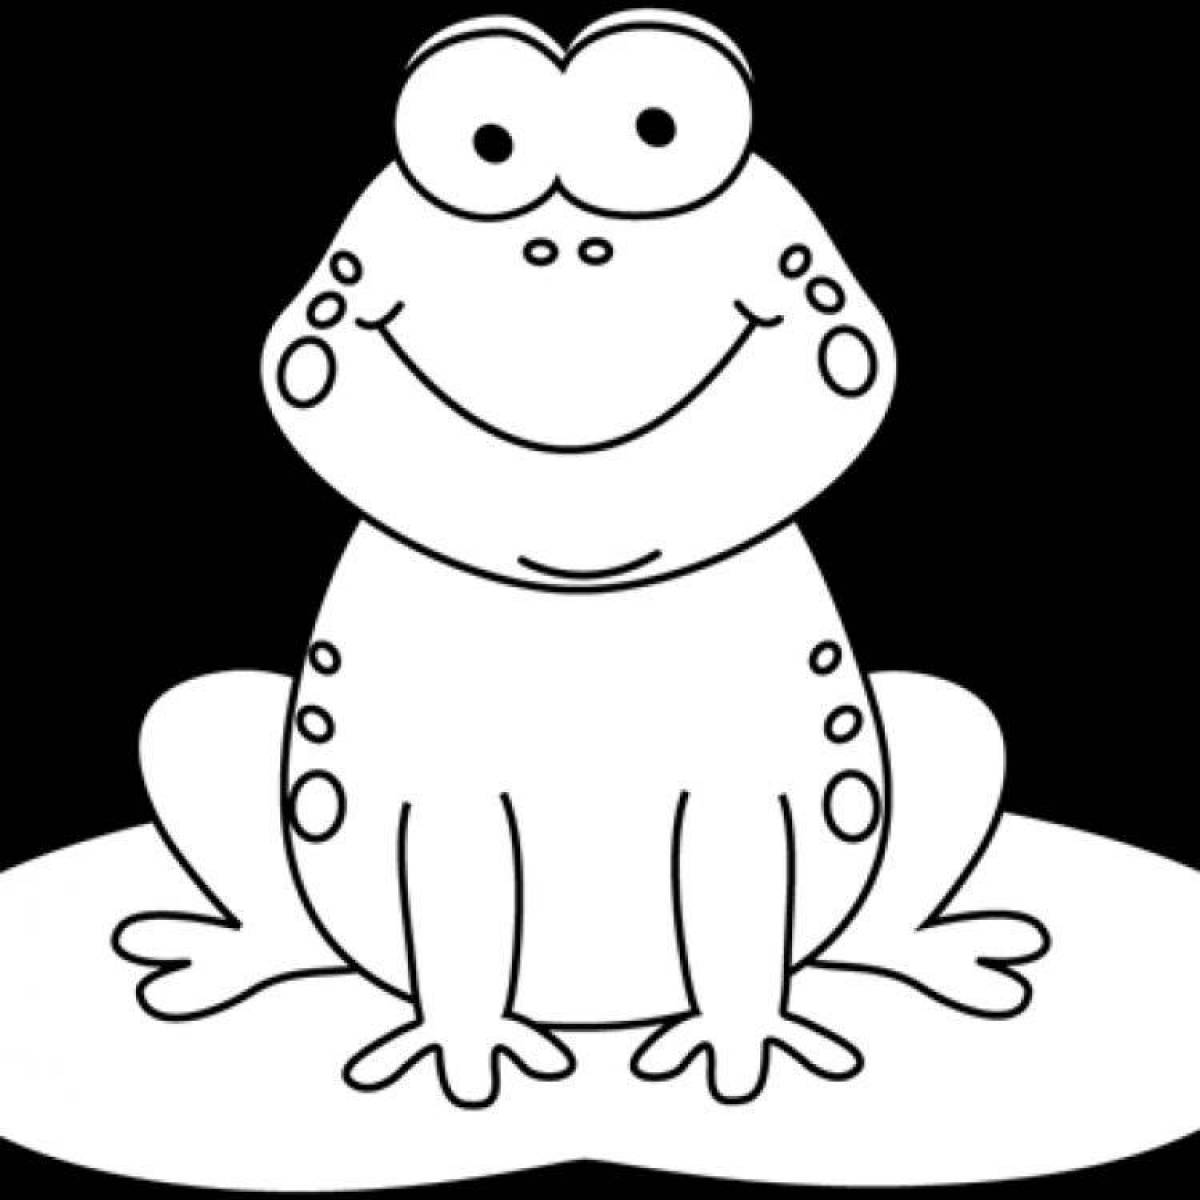 Adorable cute frog coloring book